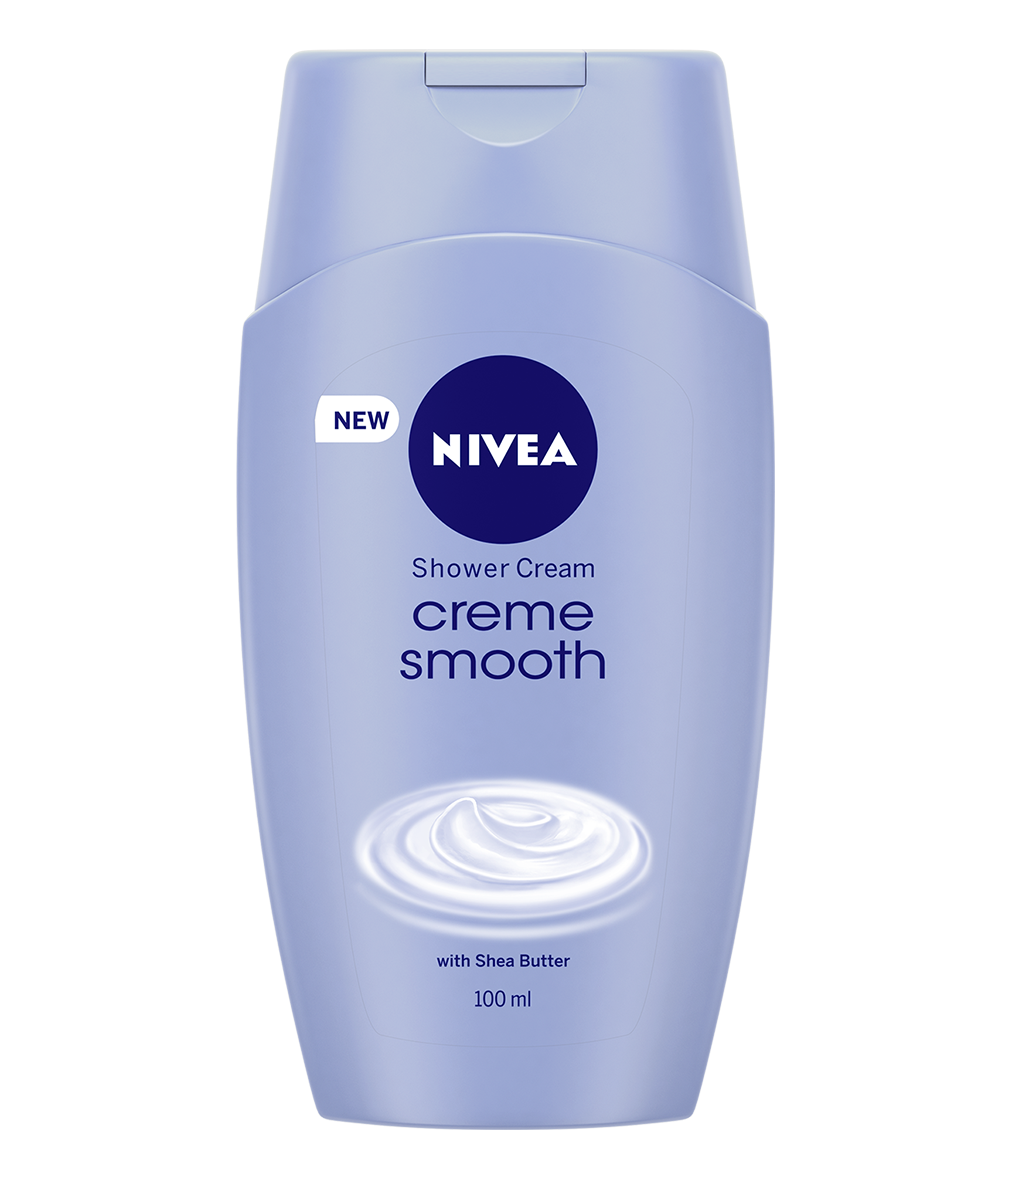 Shower cream gel. Nivea крем 250мл. Nivea Creme smooth. Nivea Care Shower Creme Soft. Nivea Shower Gel Shea Butter гель для душа масло ши 250мл.